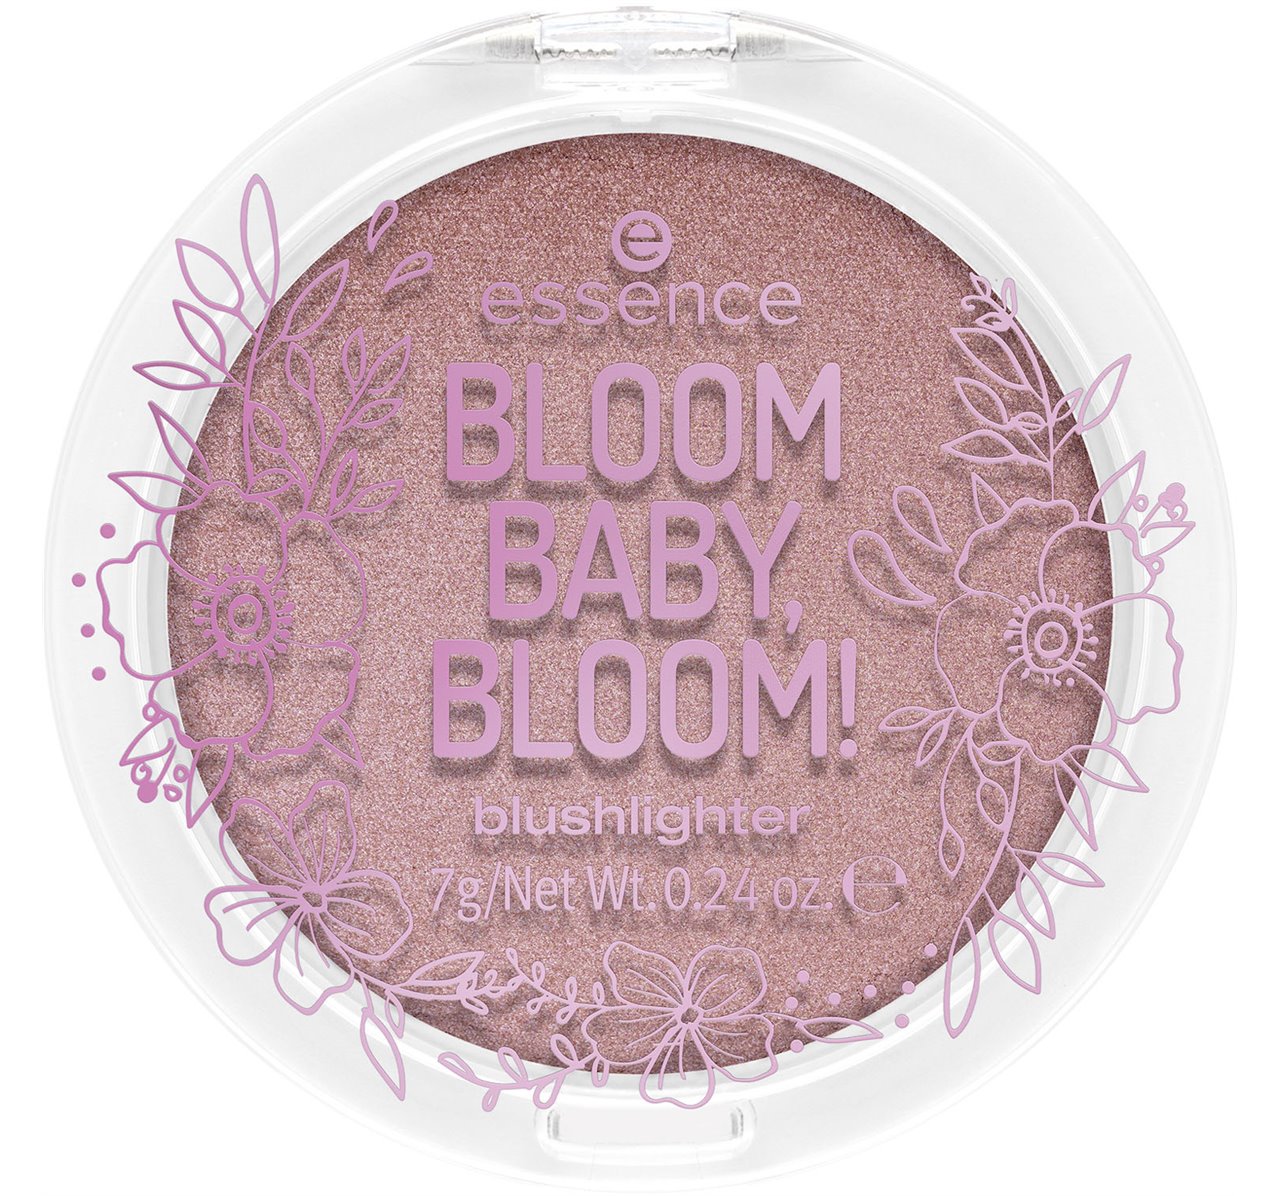 7g essence I Lilac You! 01 BLOOM! blushlighter BLOOM BABY,